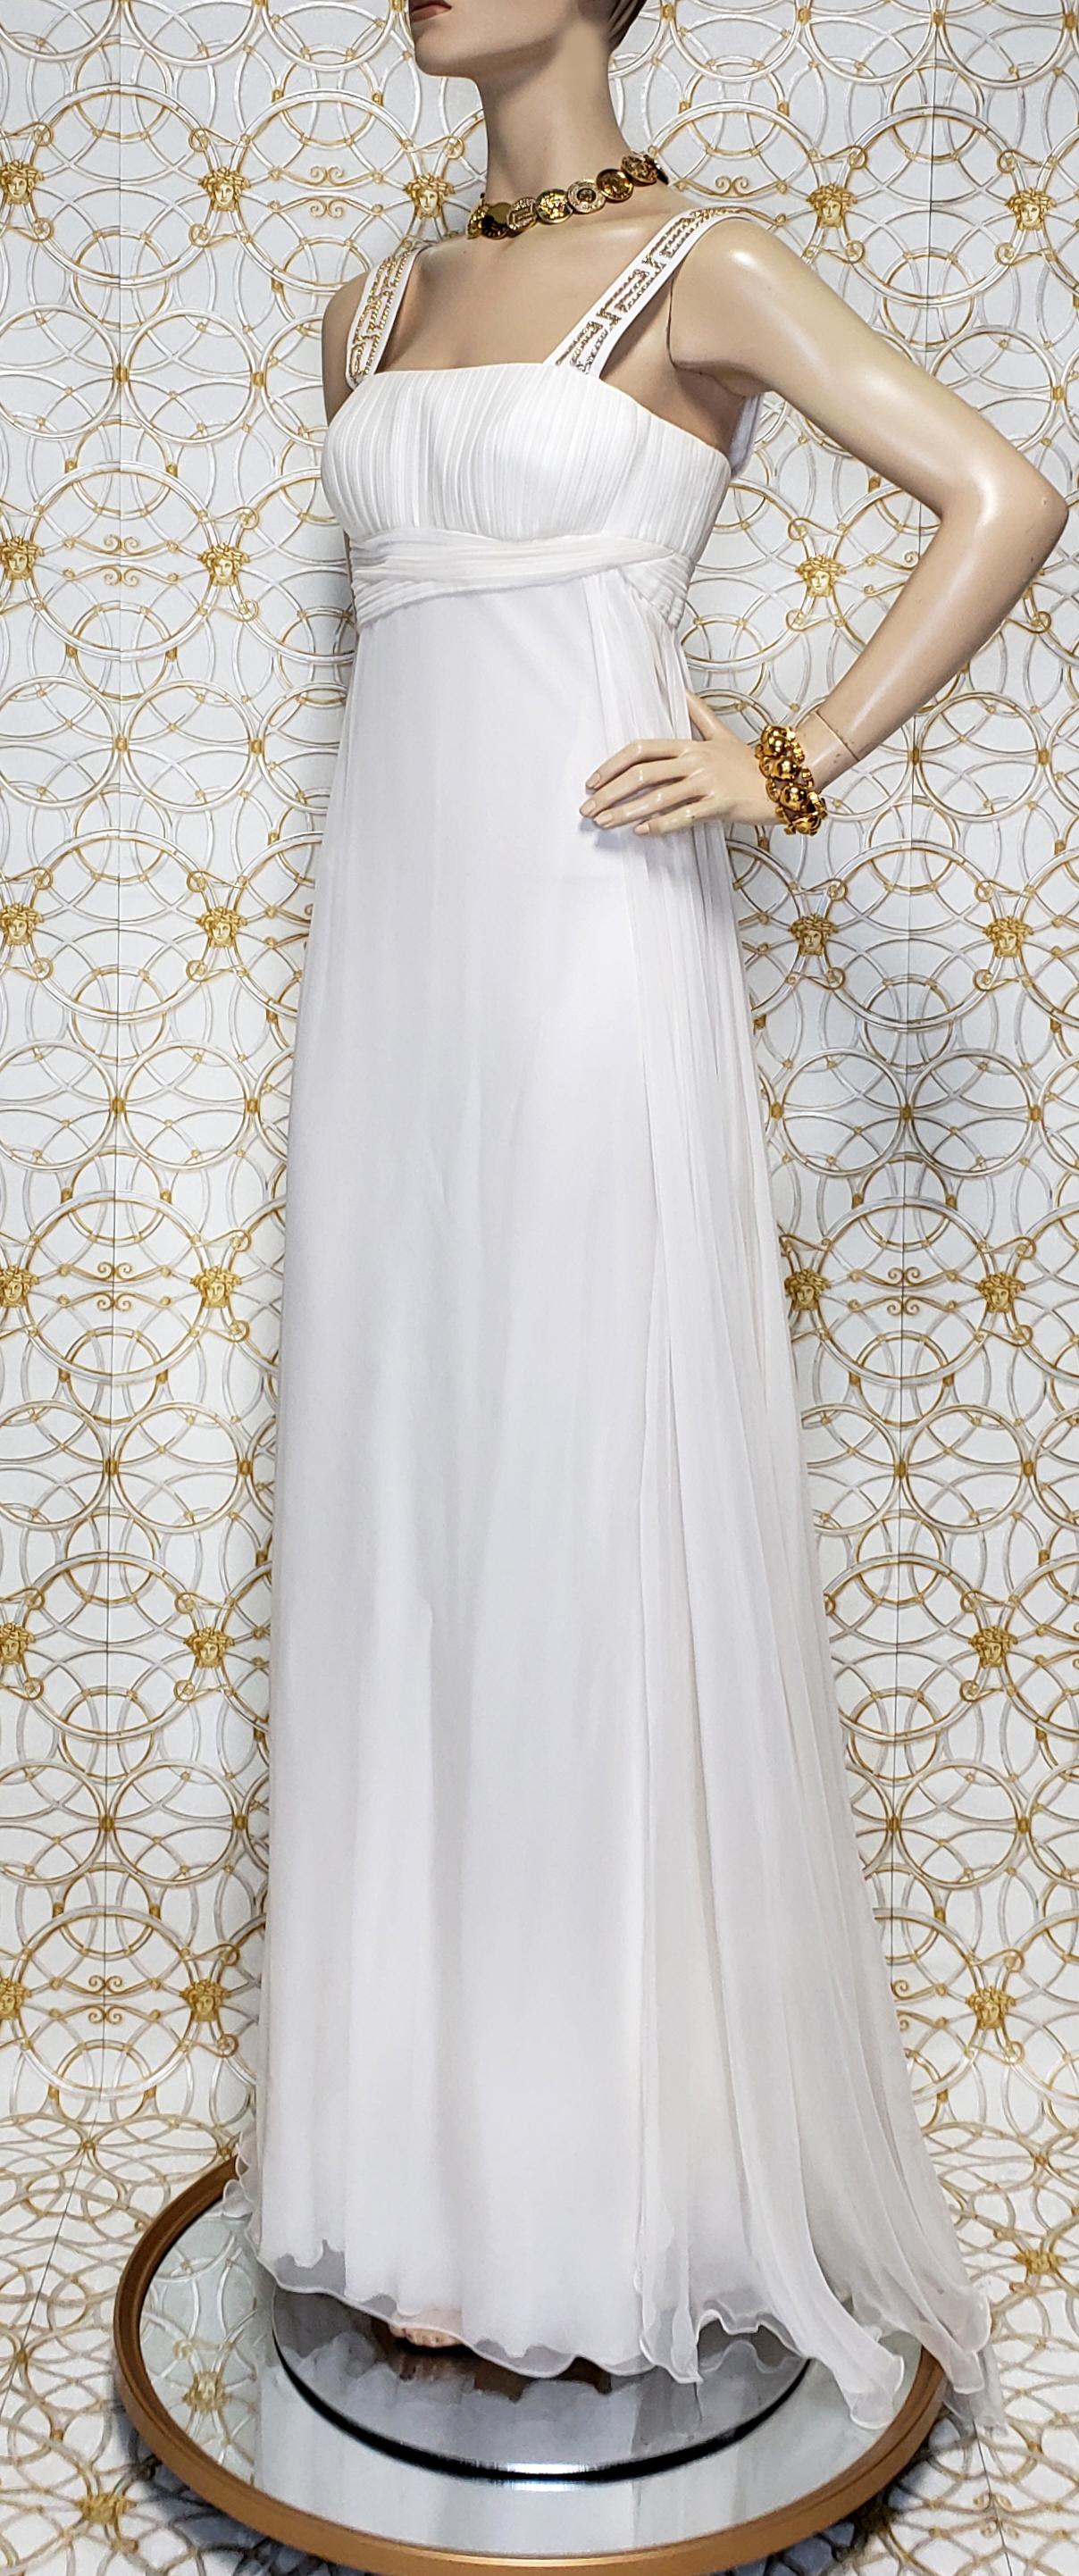 gianni versace white pleated silk dress